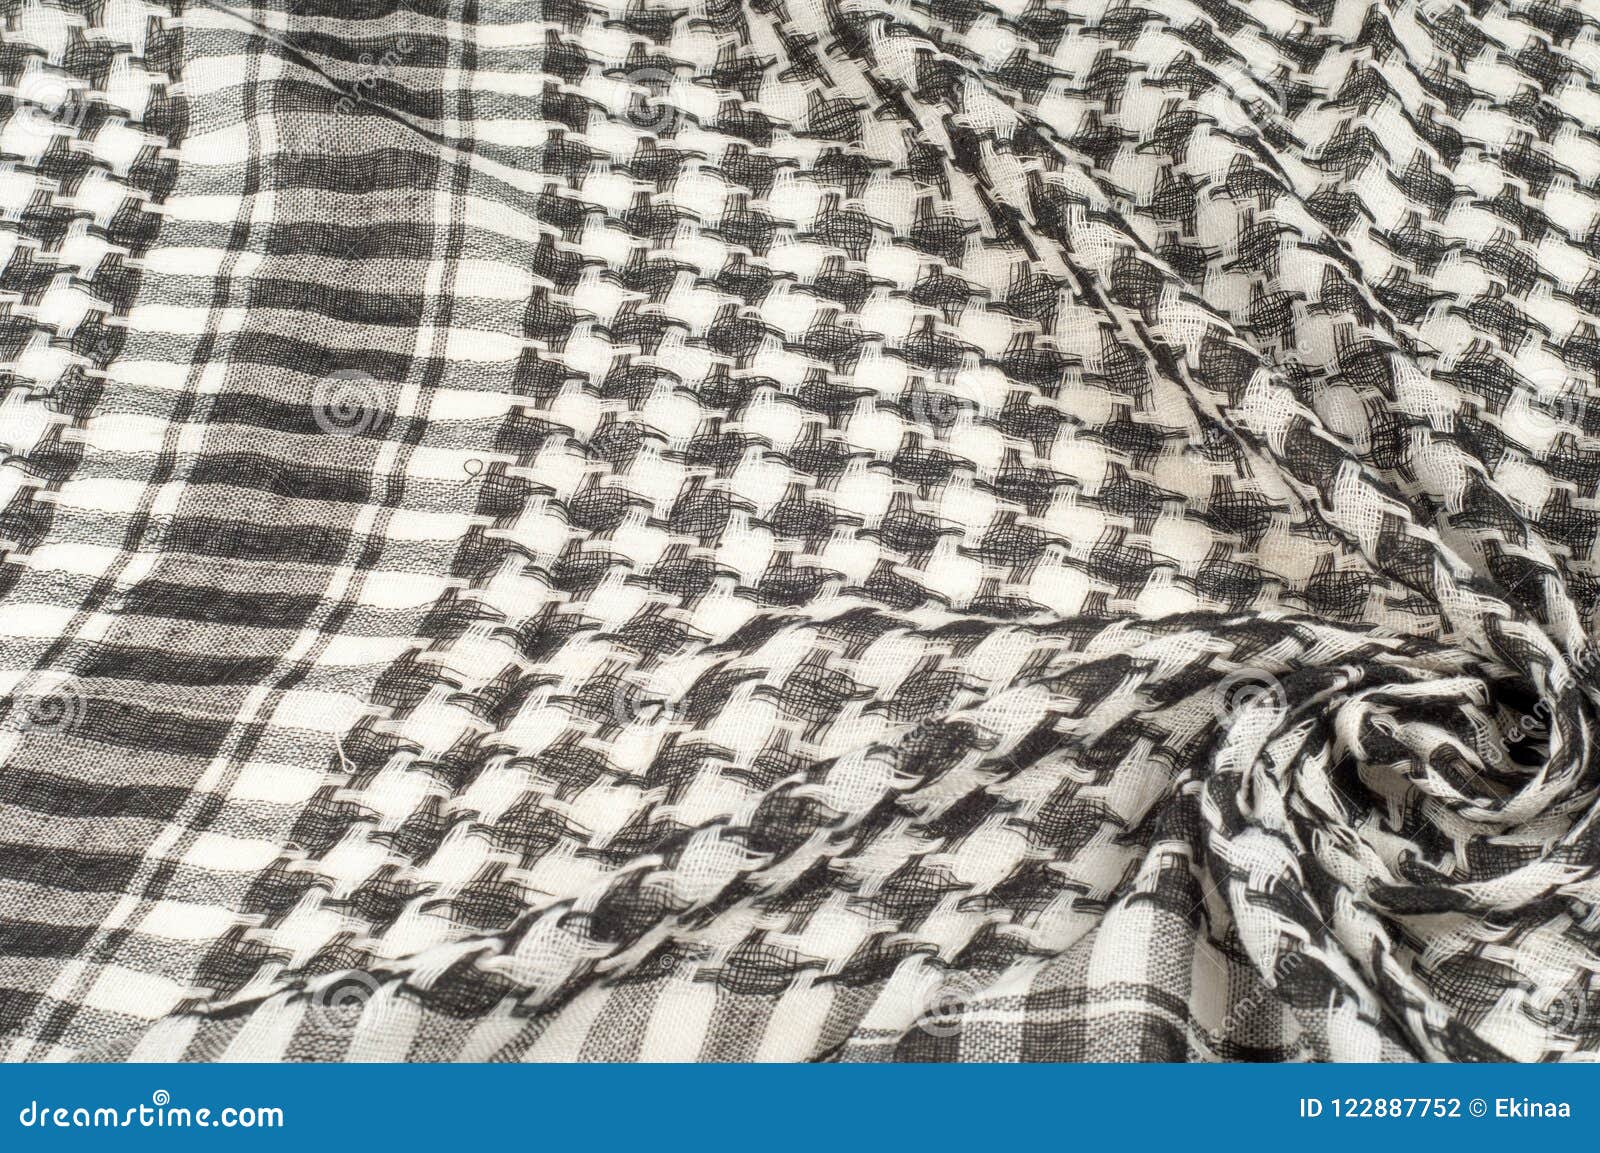 Background texture, pattern. Scarf wool like Yasir Arafat. The